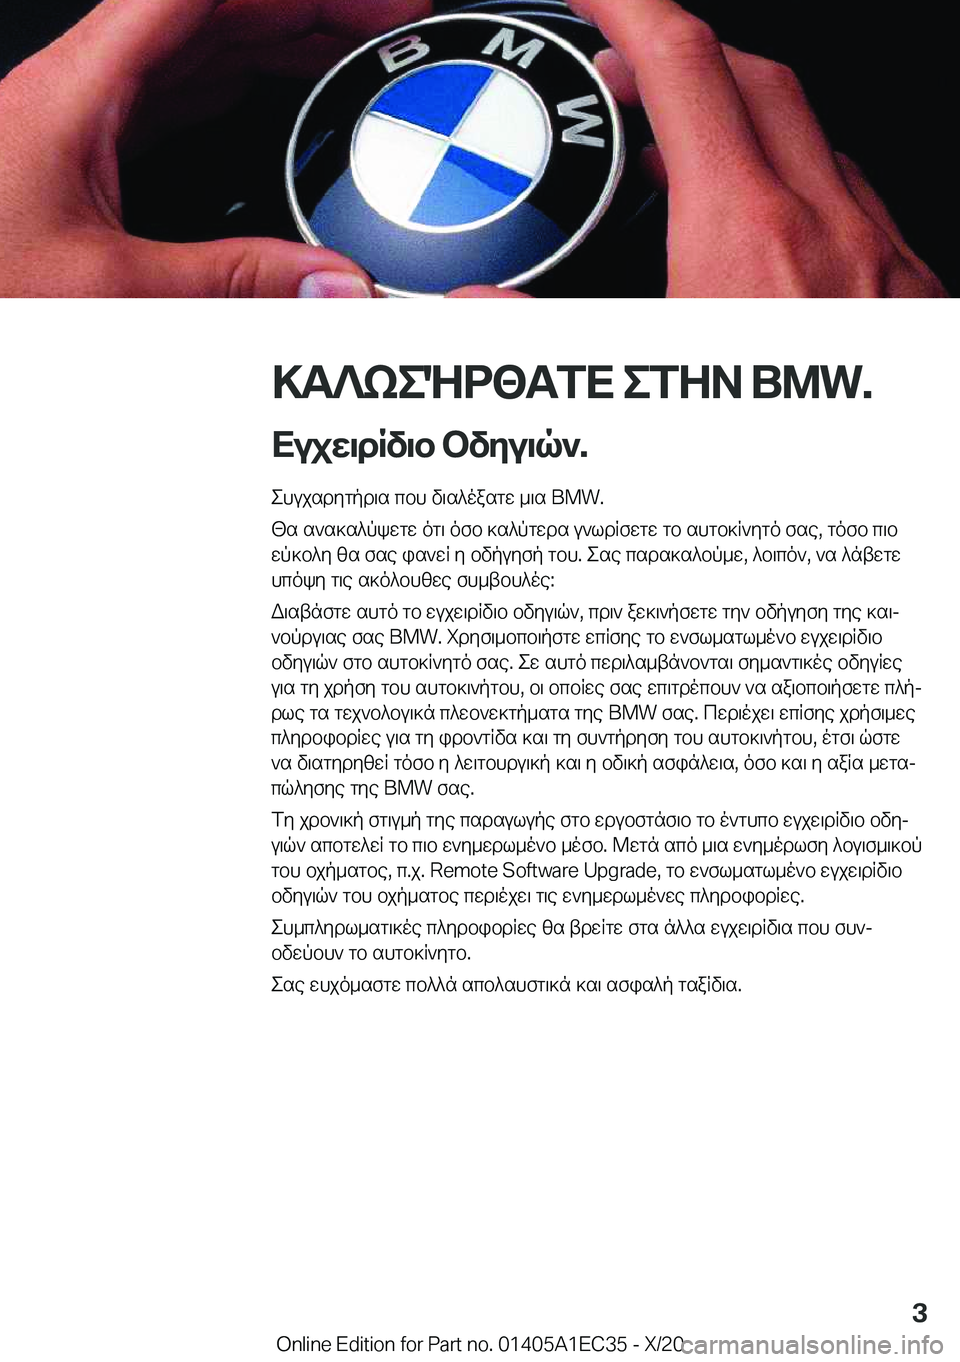 BMW 8 SERIES GRAN COUPE 2021  ΟΔΗΓΌΣ ΧΡΉΣΗΣ (in Greek) >T?keNd<TfX�efZA��B�M�W�.
Xujw\dRv\b�bvyu\q`�. ehujsdygpd\s�cbh�v\s^oasgw�_\s��B�M�W�.
[s�s`s]s^pkwgw�og\�ofb�